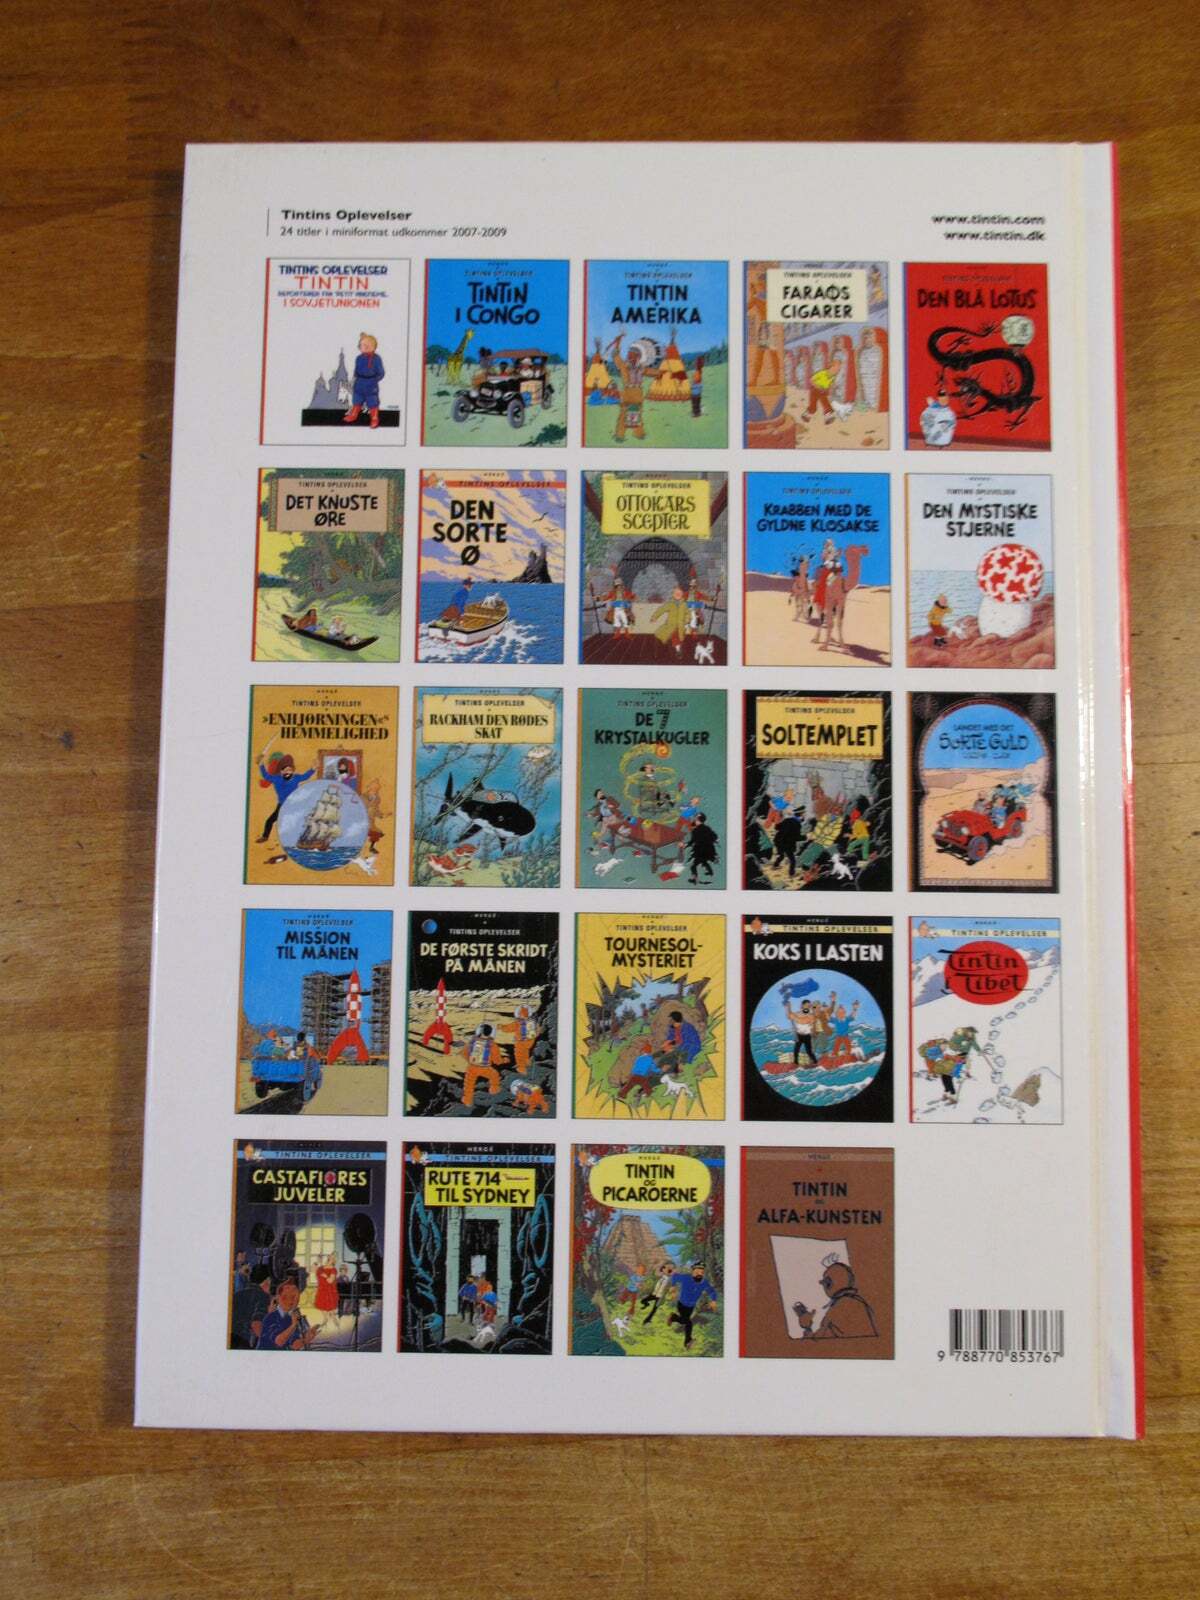 Tintin minicomics 22 - Rute 714 til Sydney, Hergé / Herge,